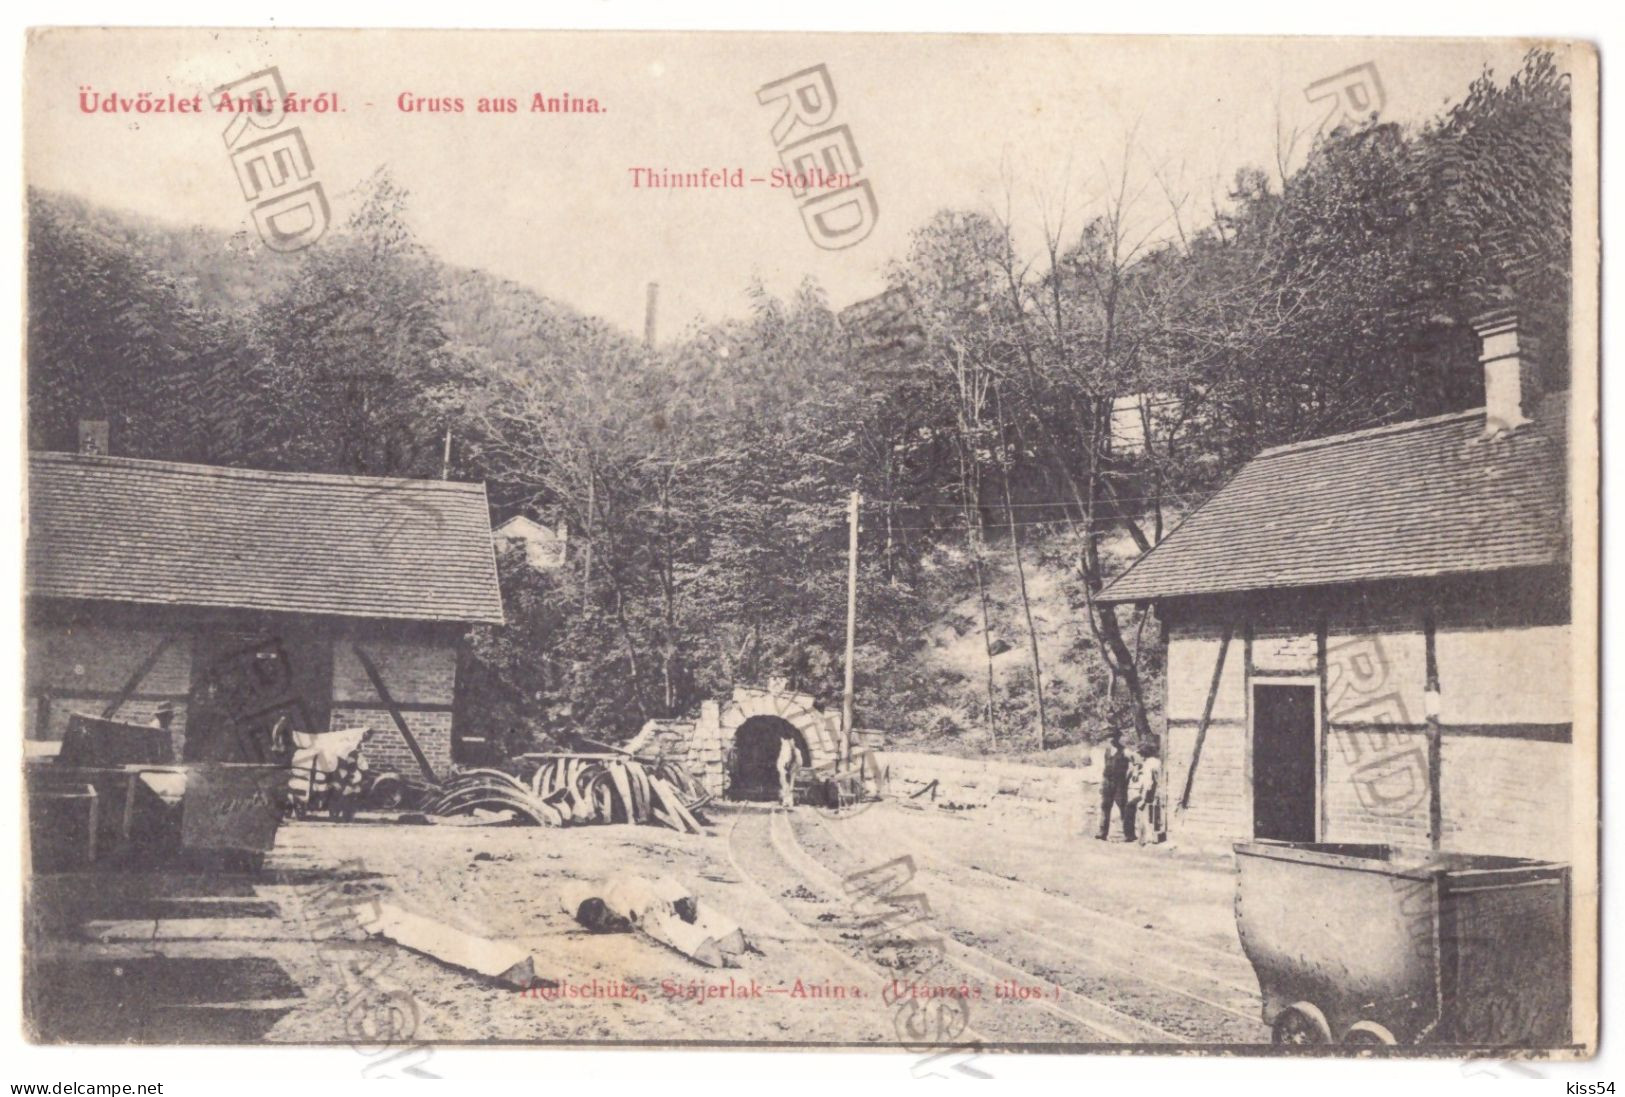 RO - 25433 ANINA, Caras-Severin, Tunnel To Mine, Romania - Old Postcard - Used - 1909 - Rumania